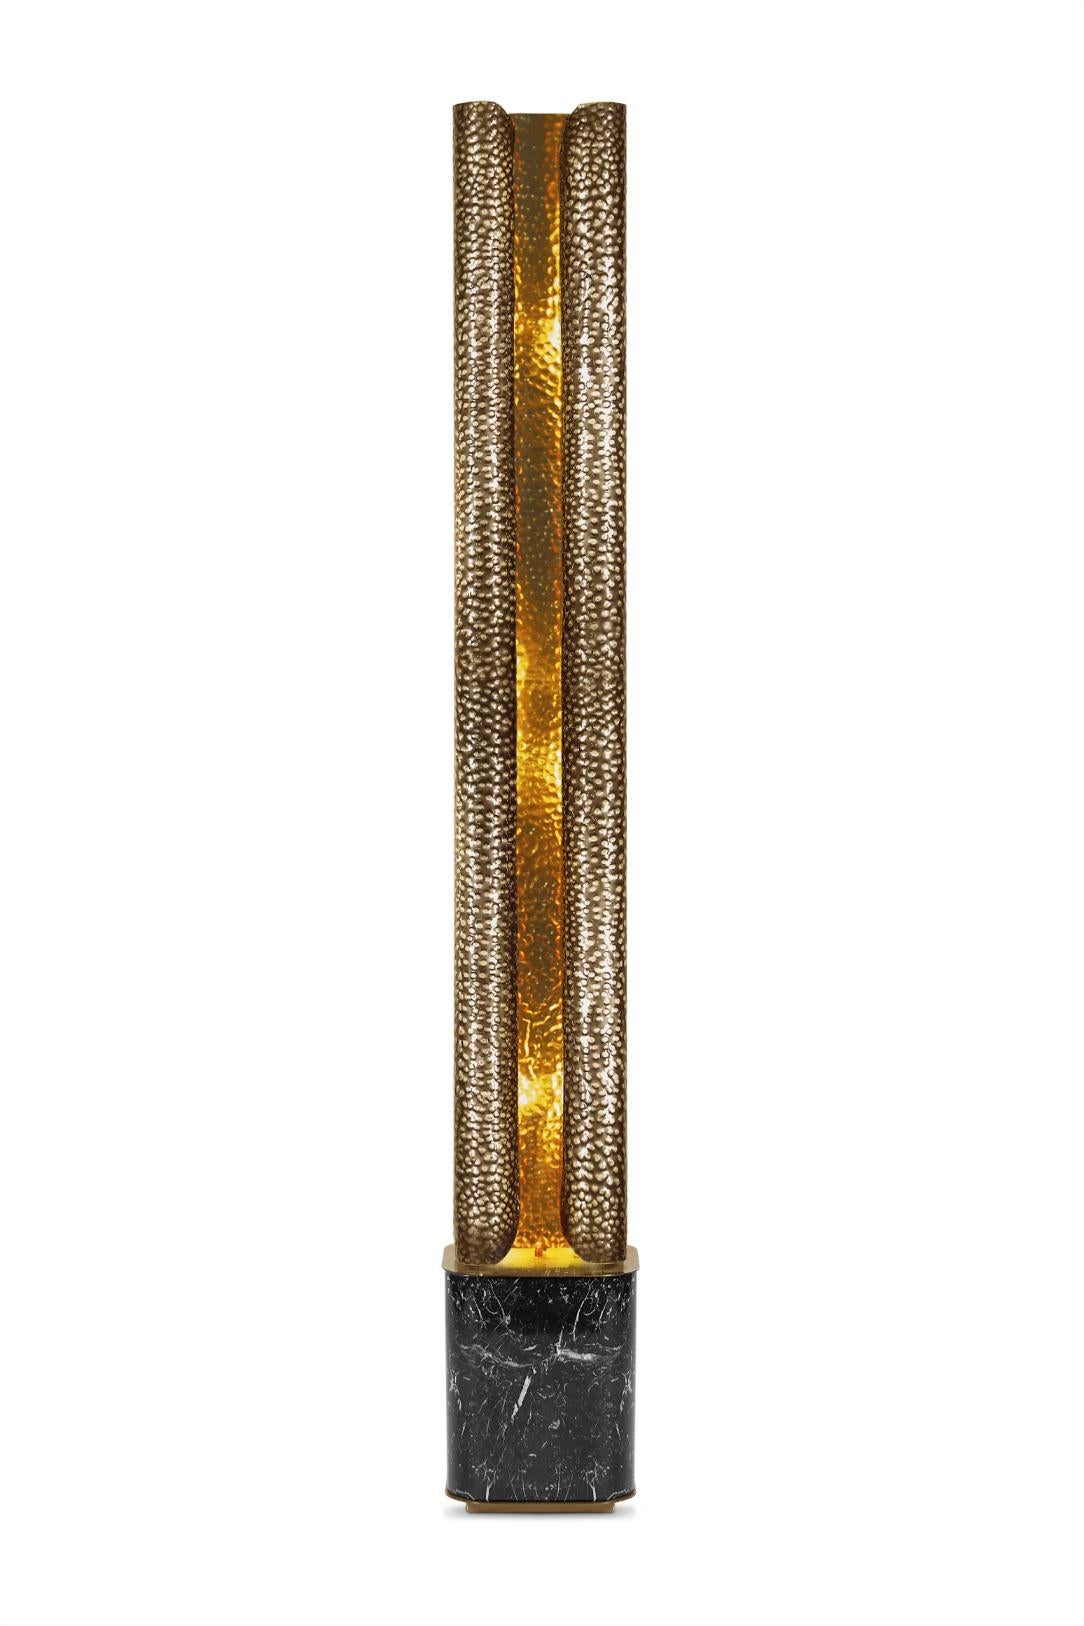 Mid-Century Modern Vellum Floor Lamp in Hammered Aged Brass by Brabbu For Sale